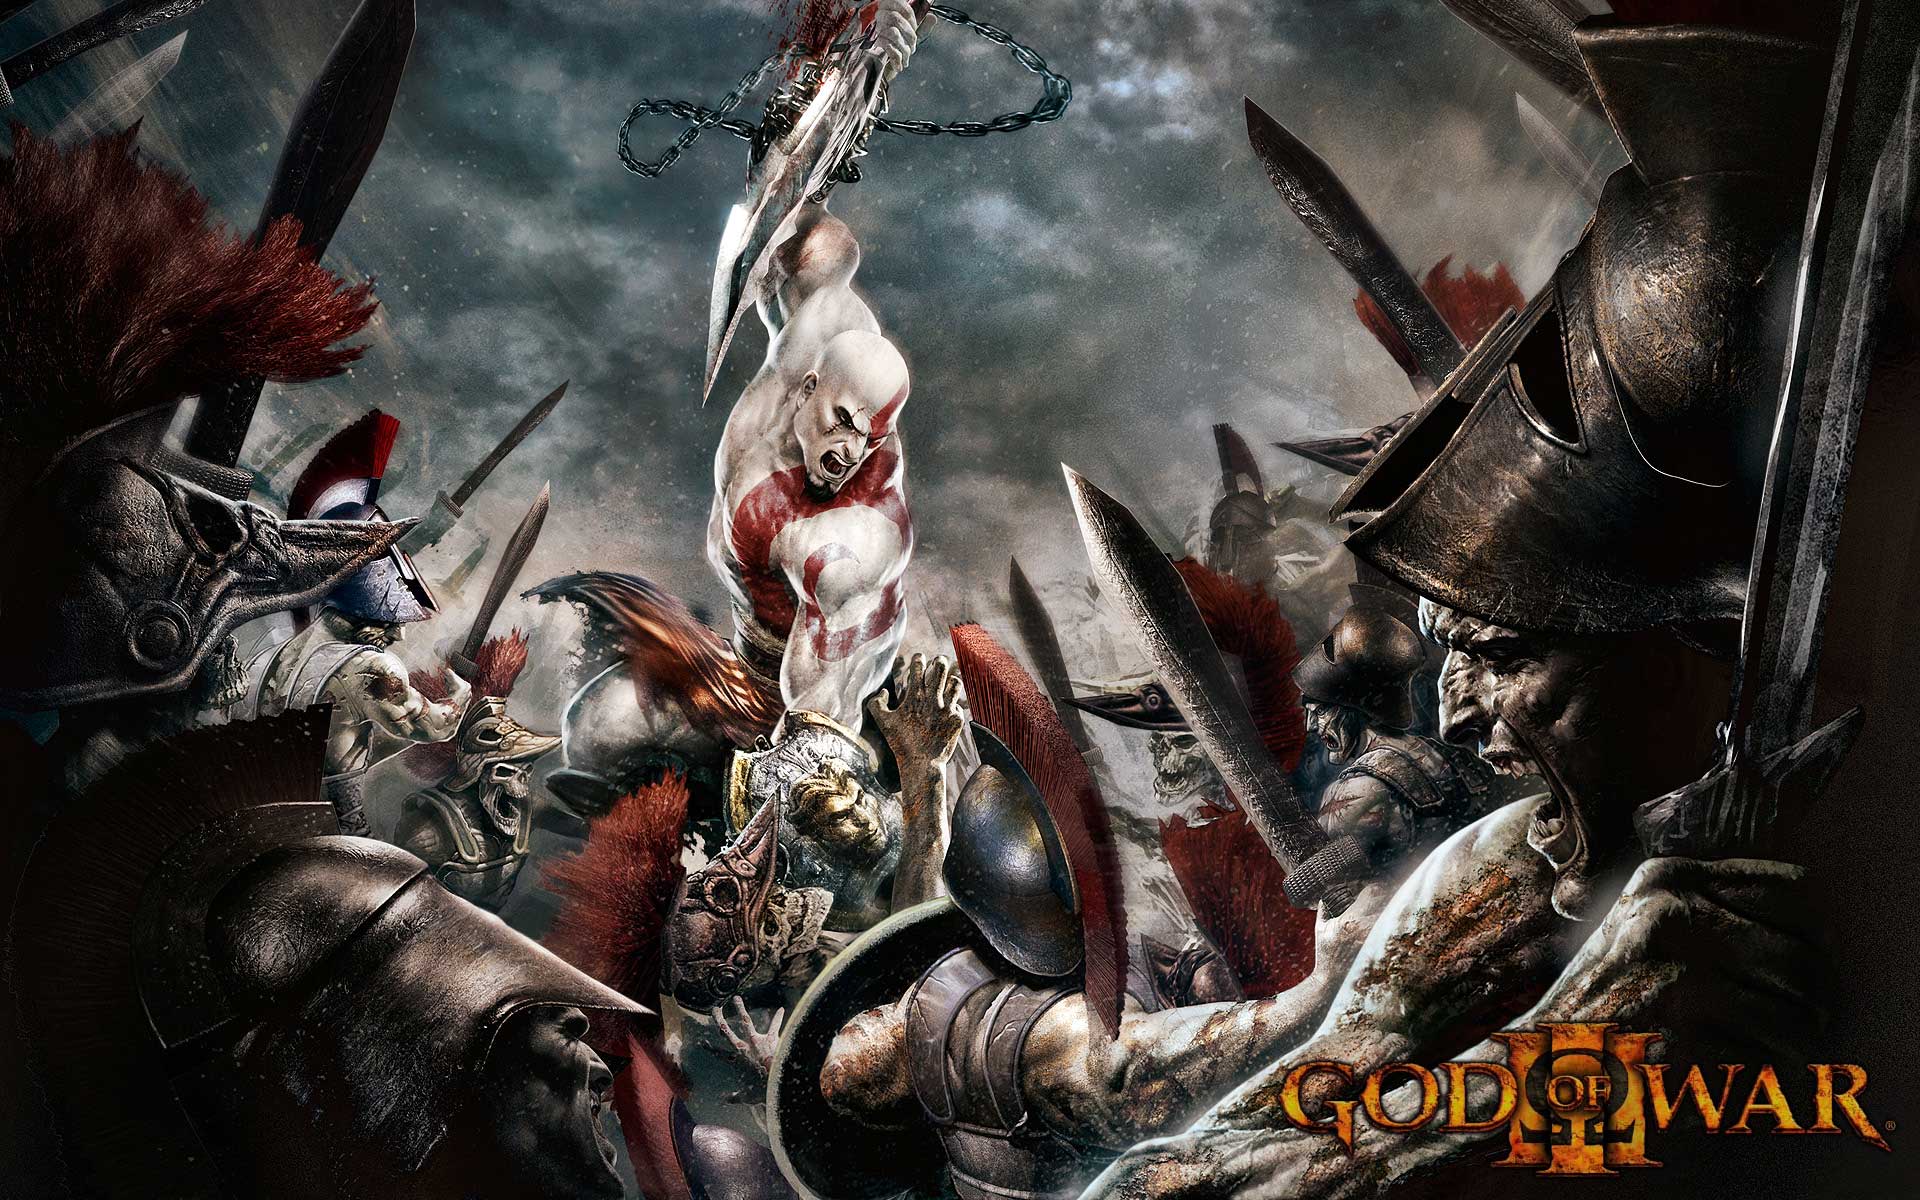 god of war 3 mobile game free download